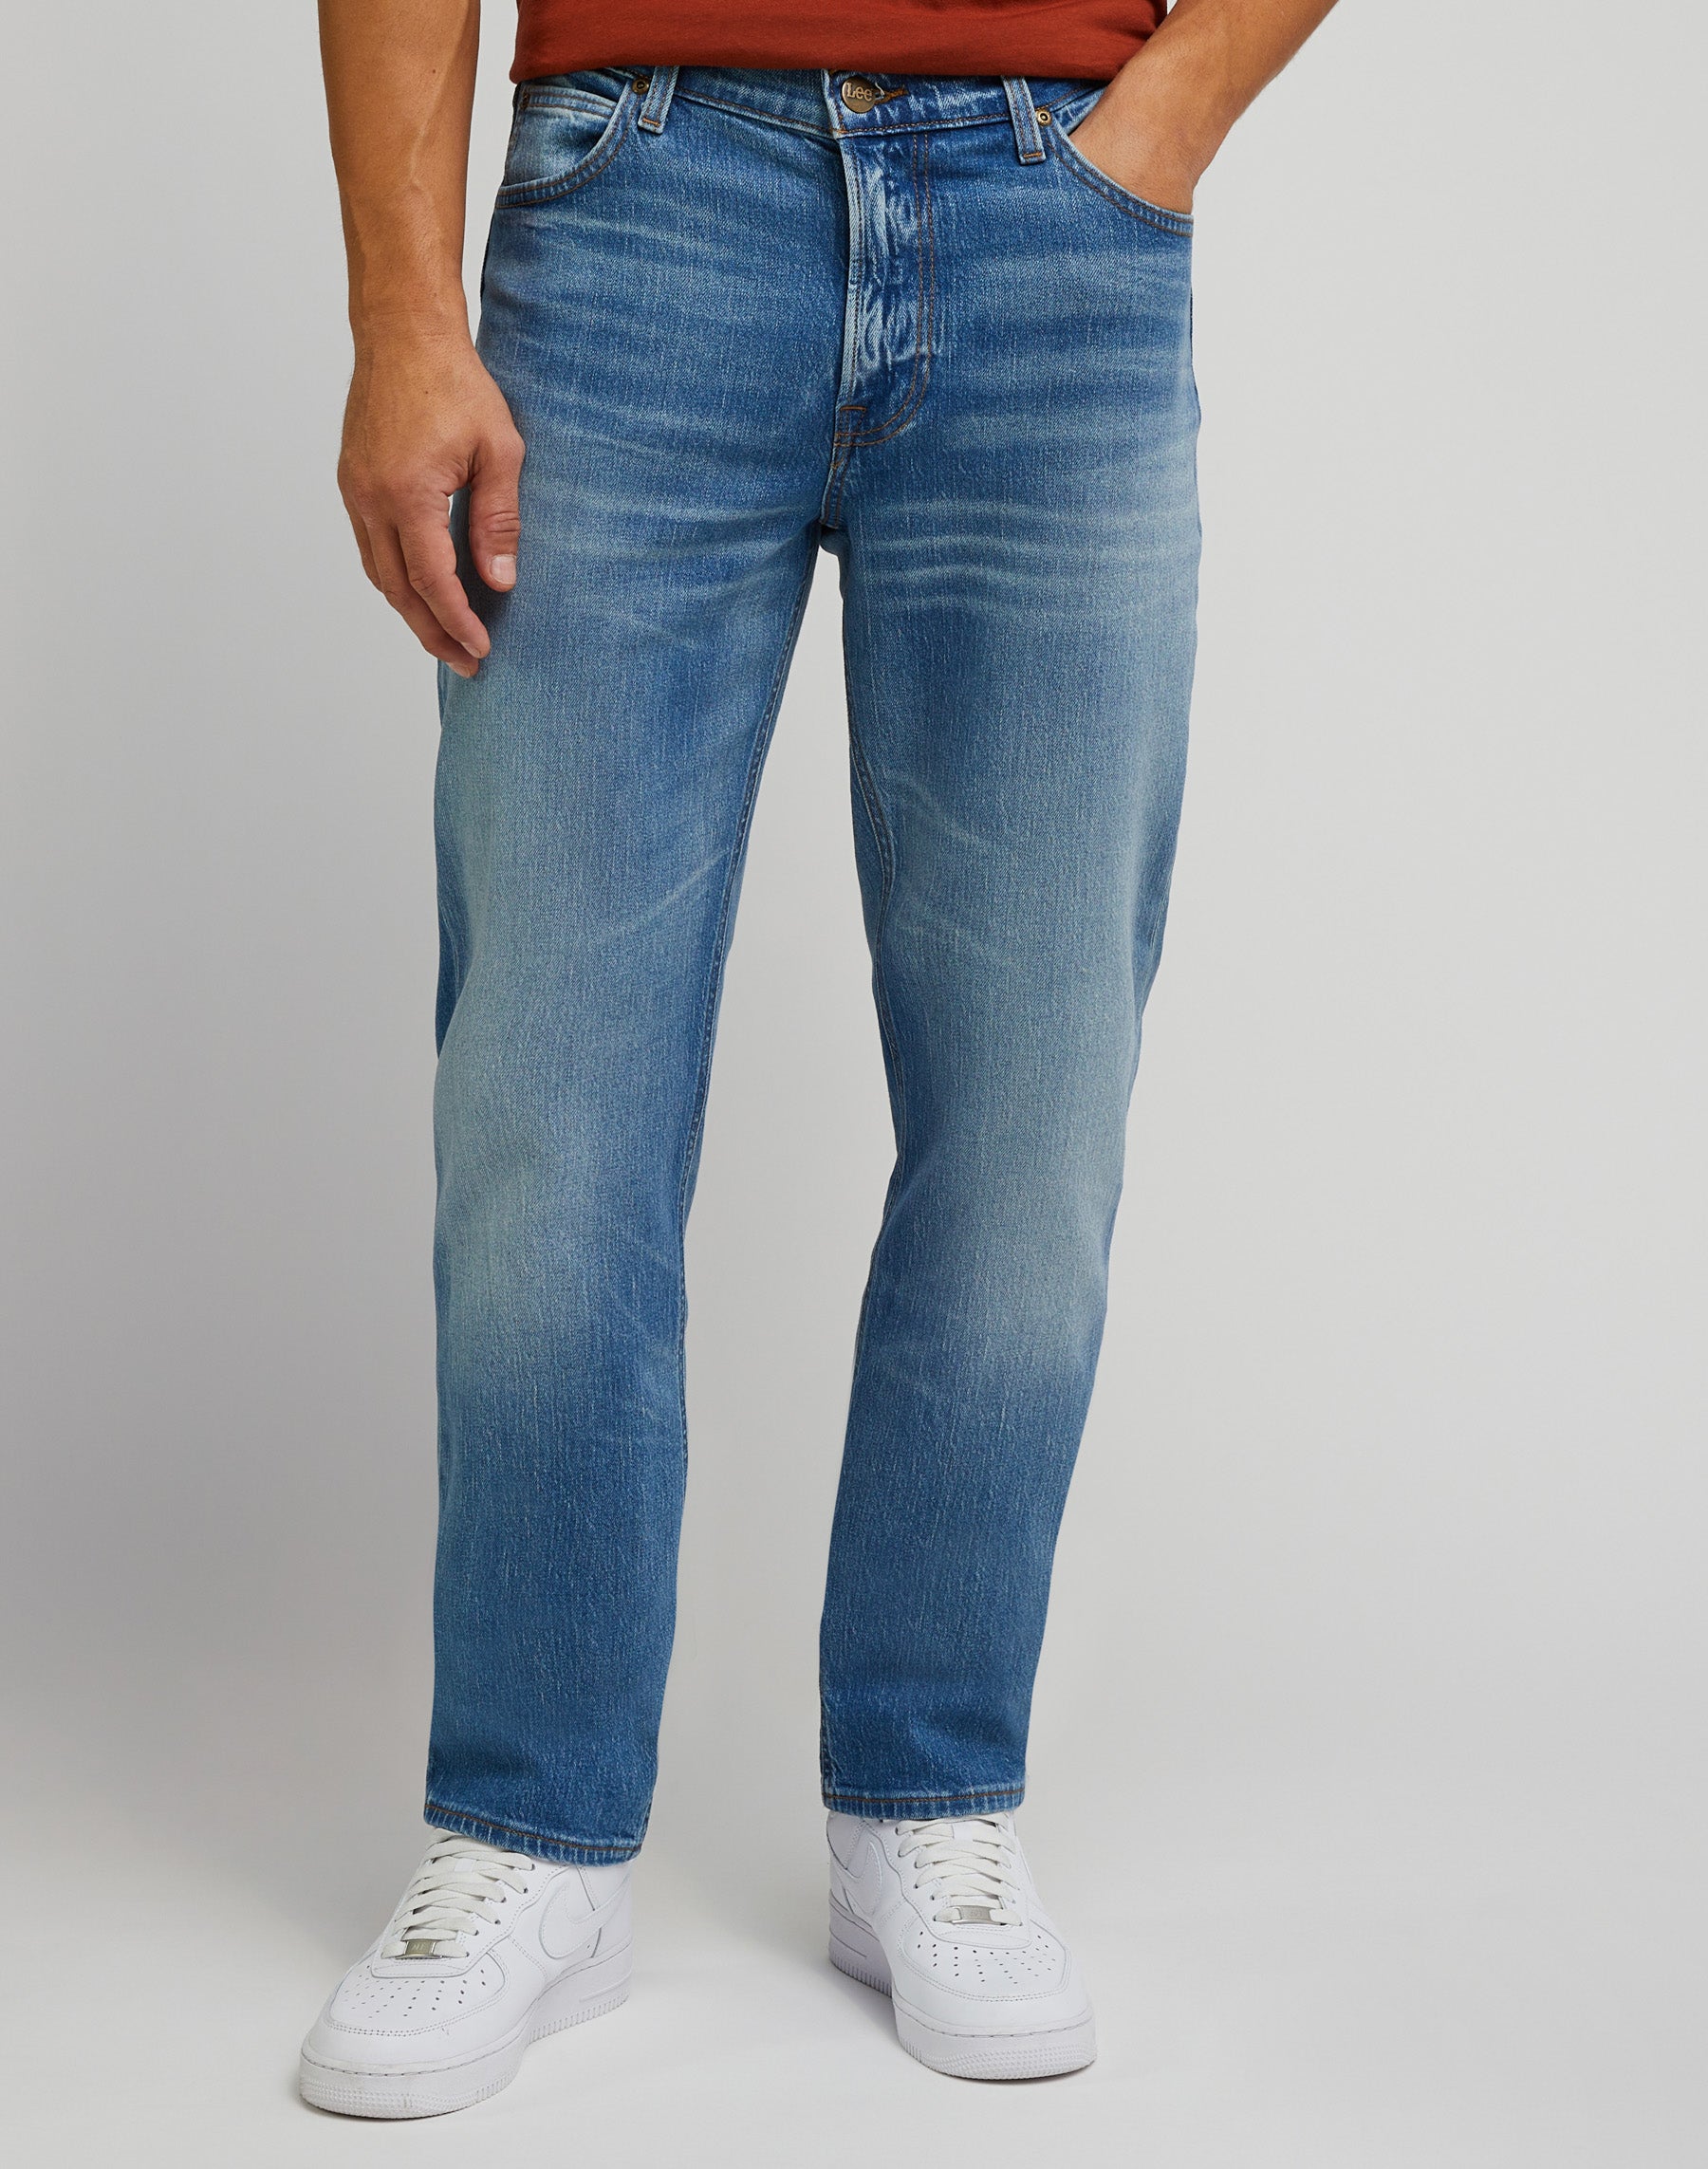 West in Vintage Wear Jeans Lee   